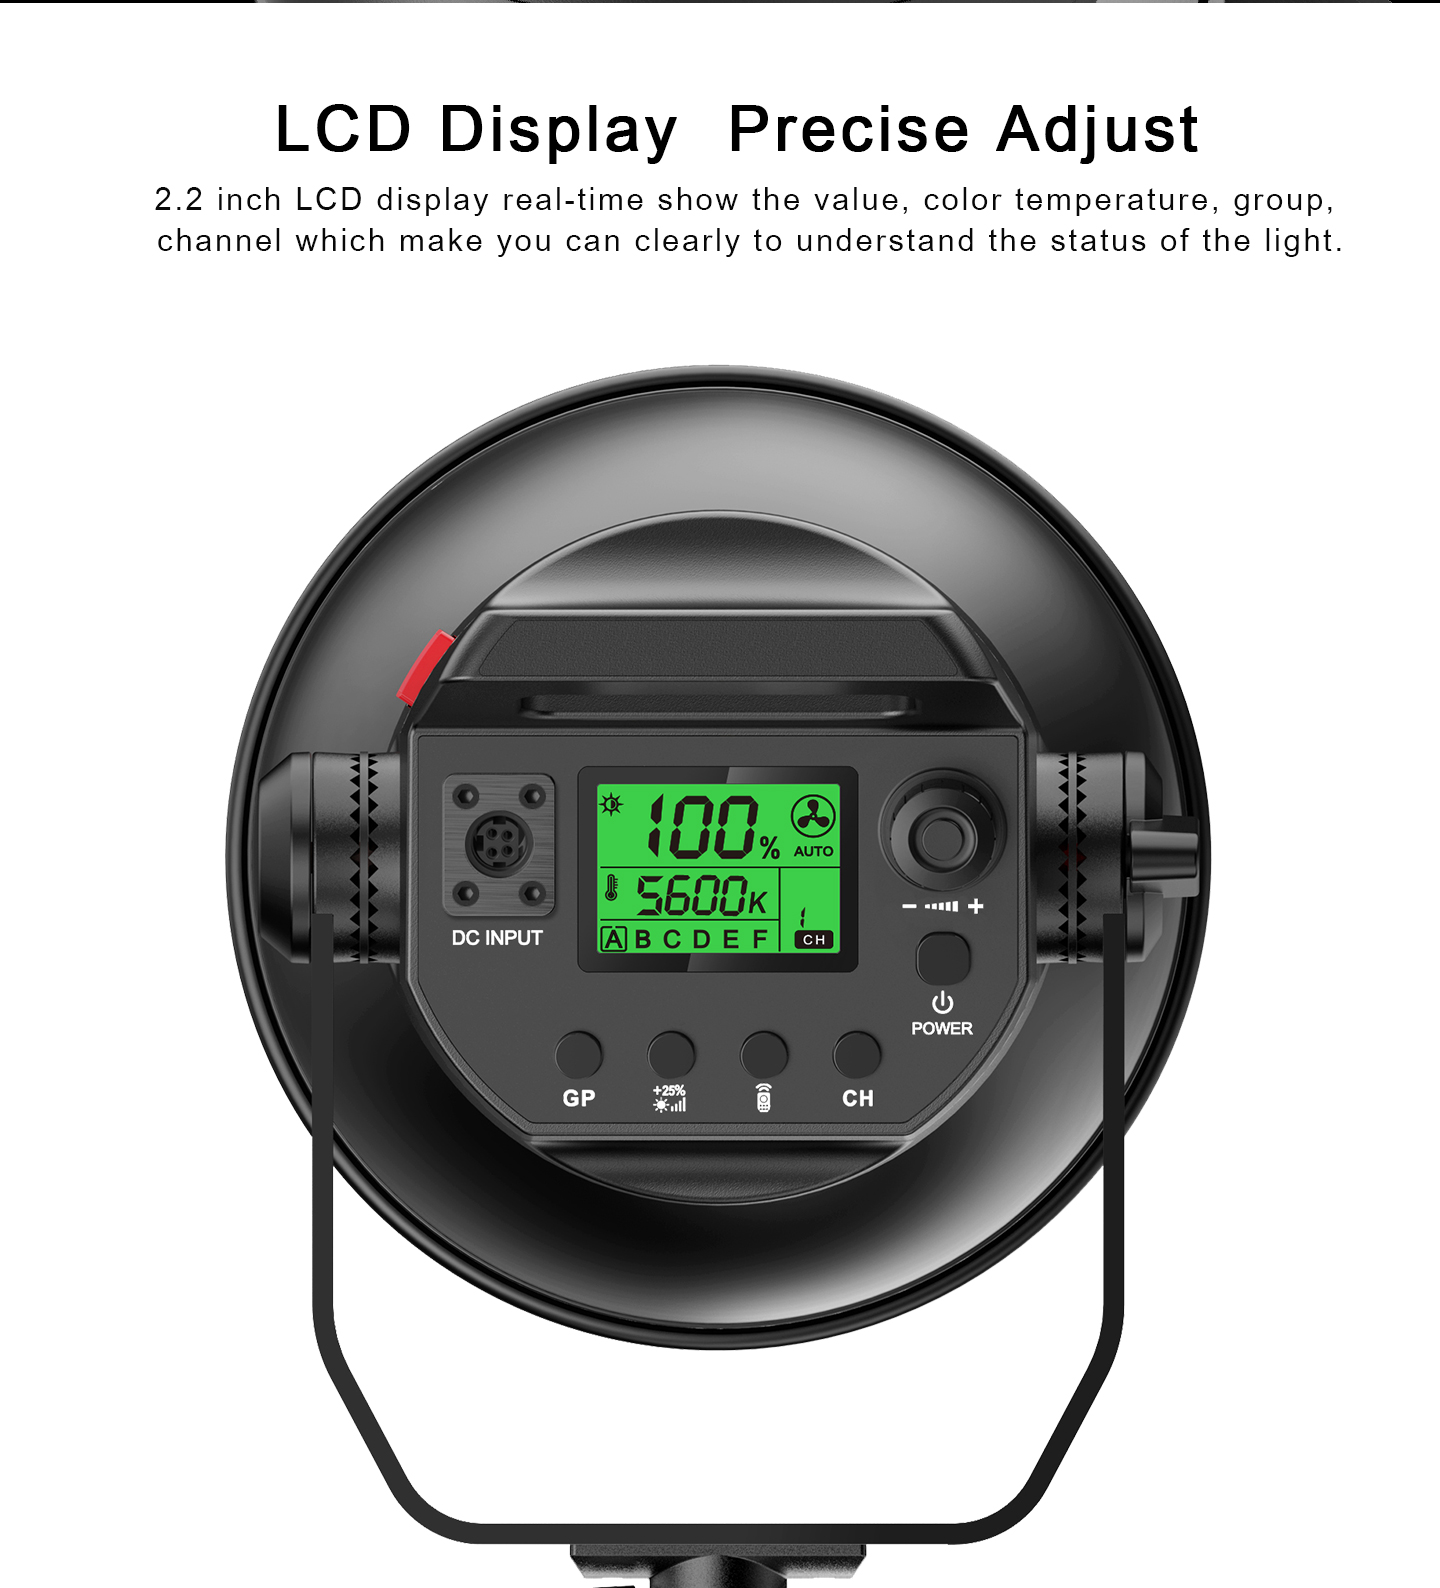 LCD Display Precise Adjust